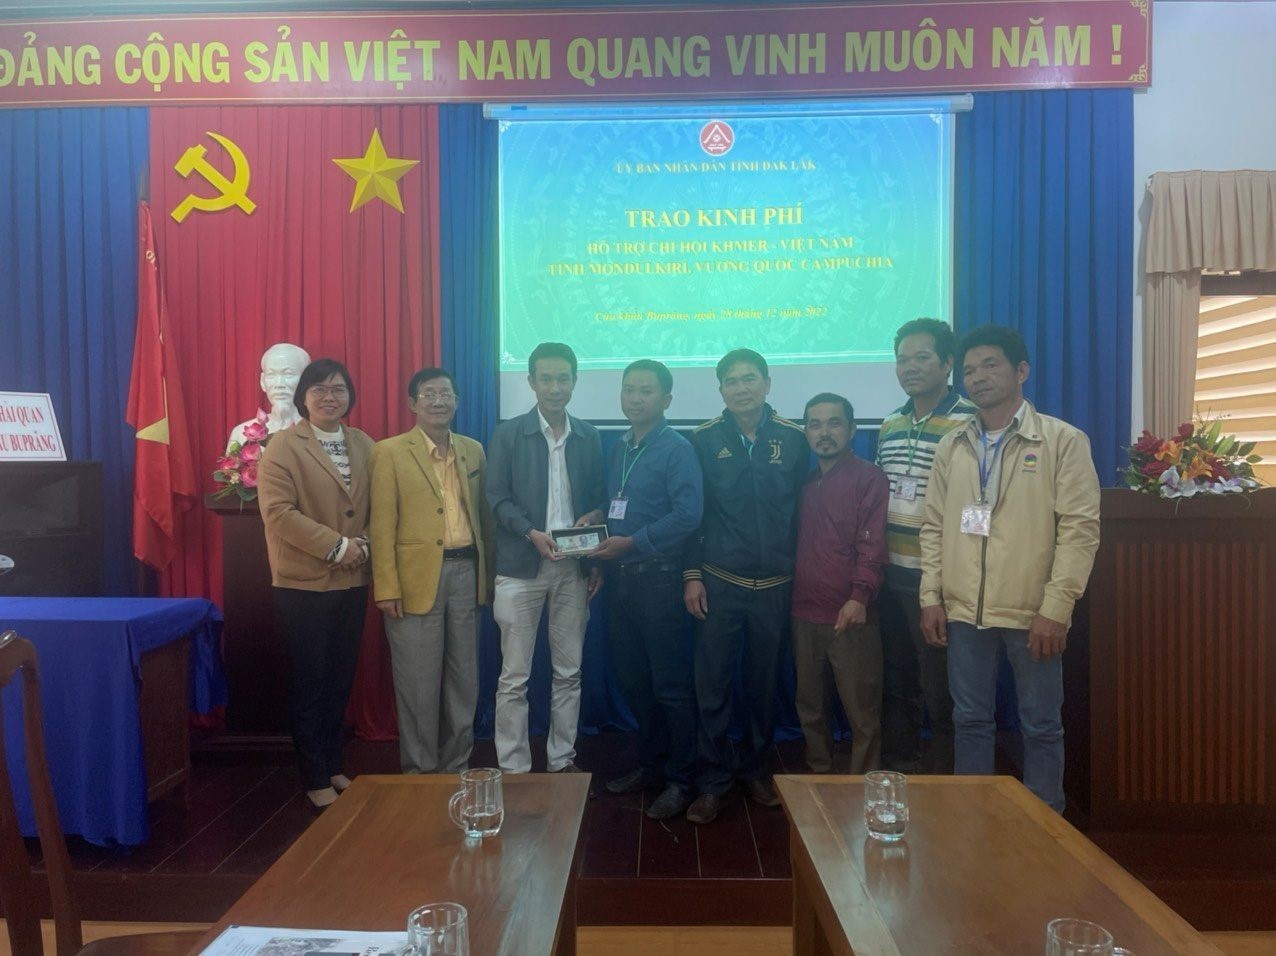 Overseas Vietnamese is a Bridge to Introduce Dak Lak to the World